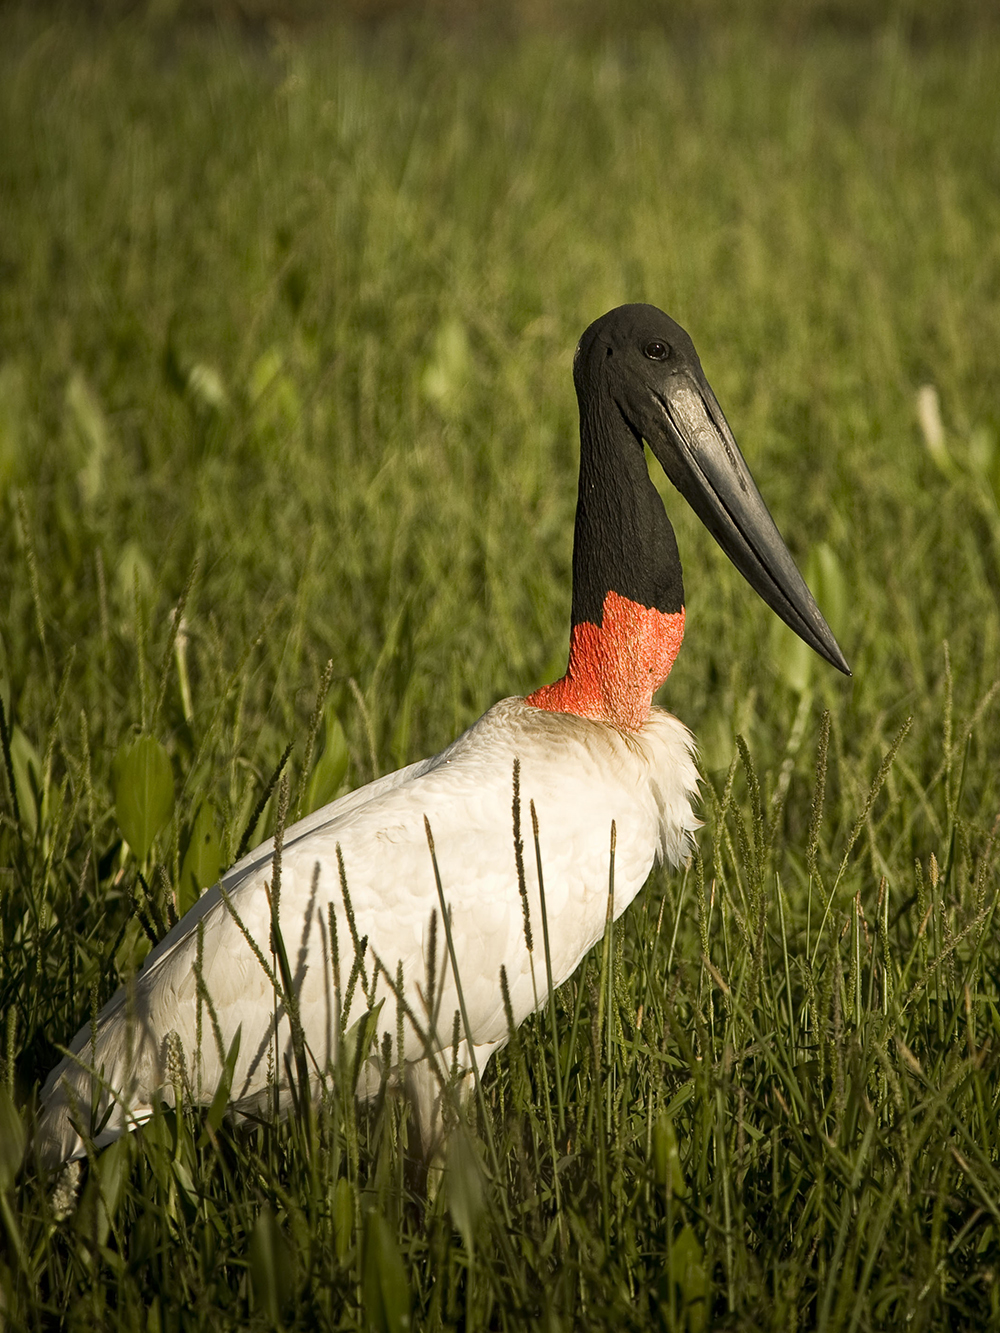 Tuiuiu Jabiru Stork - Symbole du Pantanal